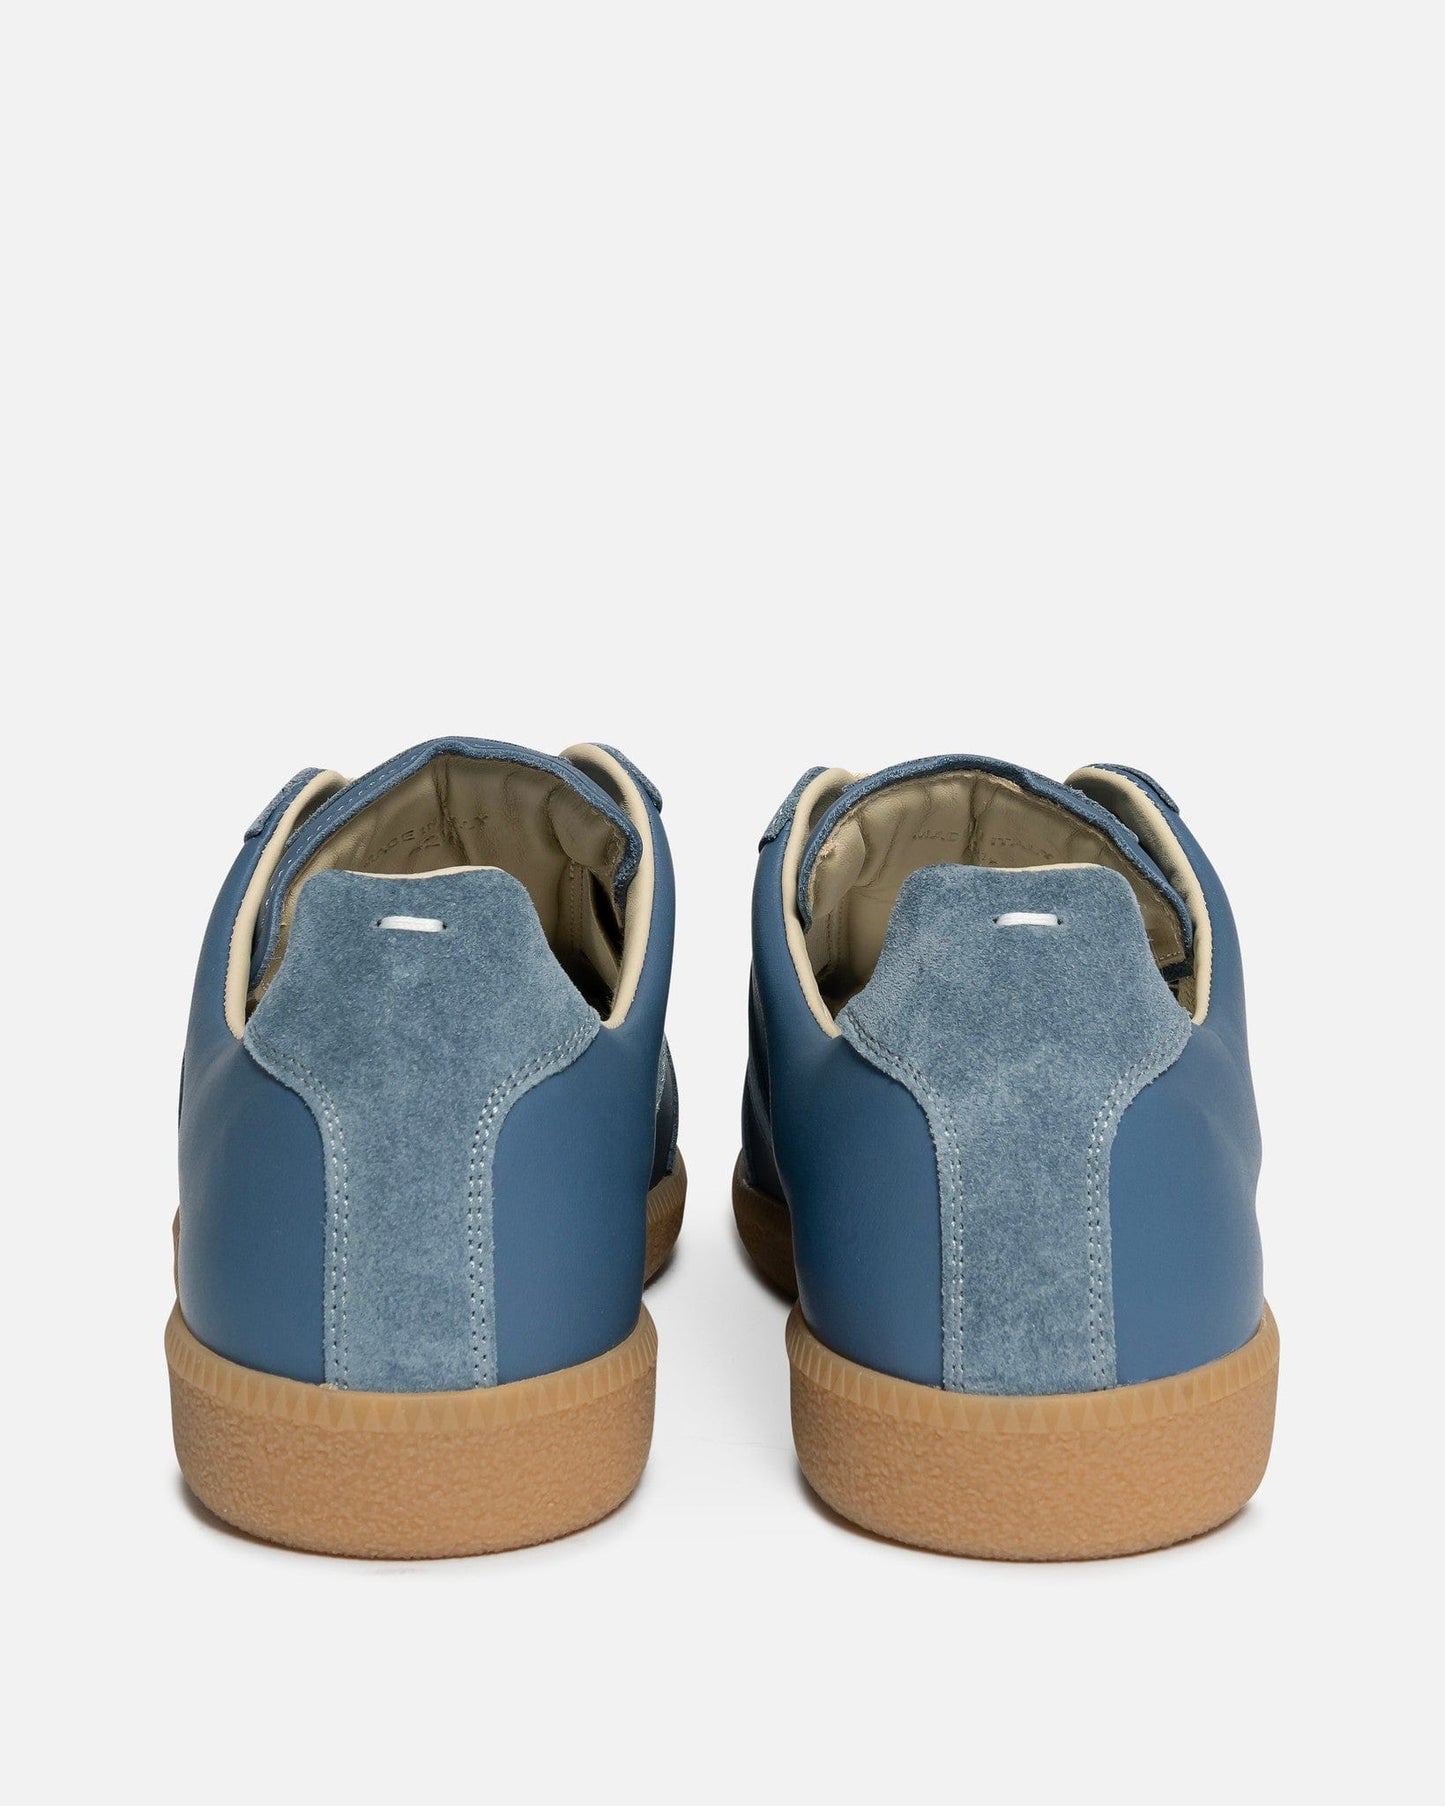 Maison Margiela Men's Shoes Replica Sneakers in Pastel Blue